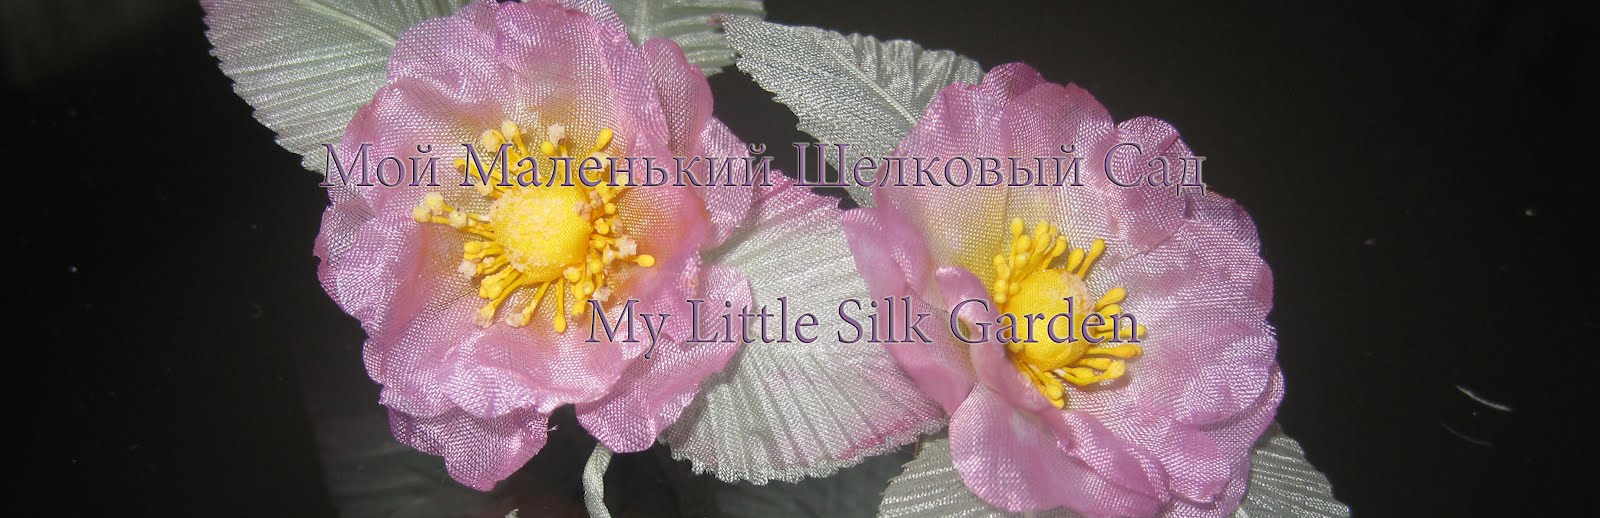 My Little Silk Garden (Беседка)